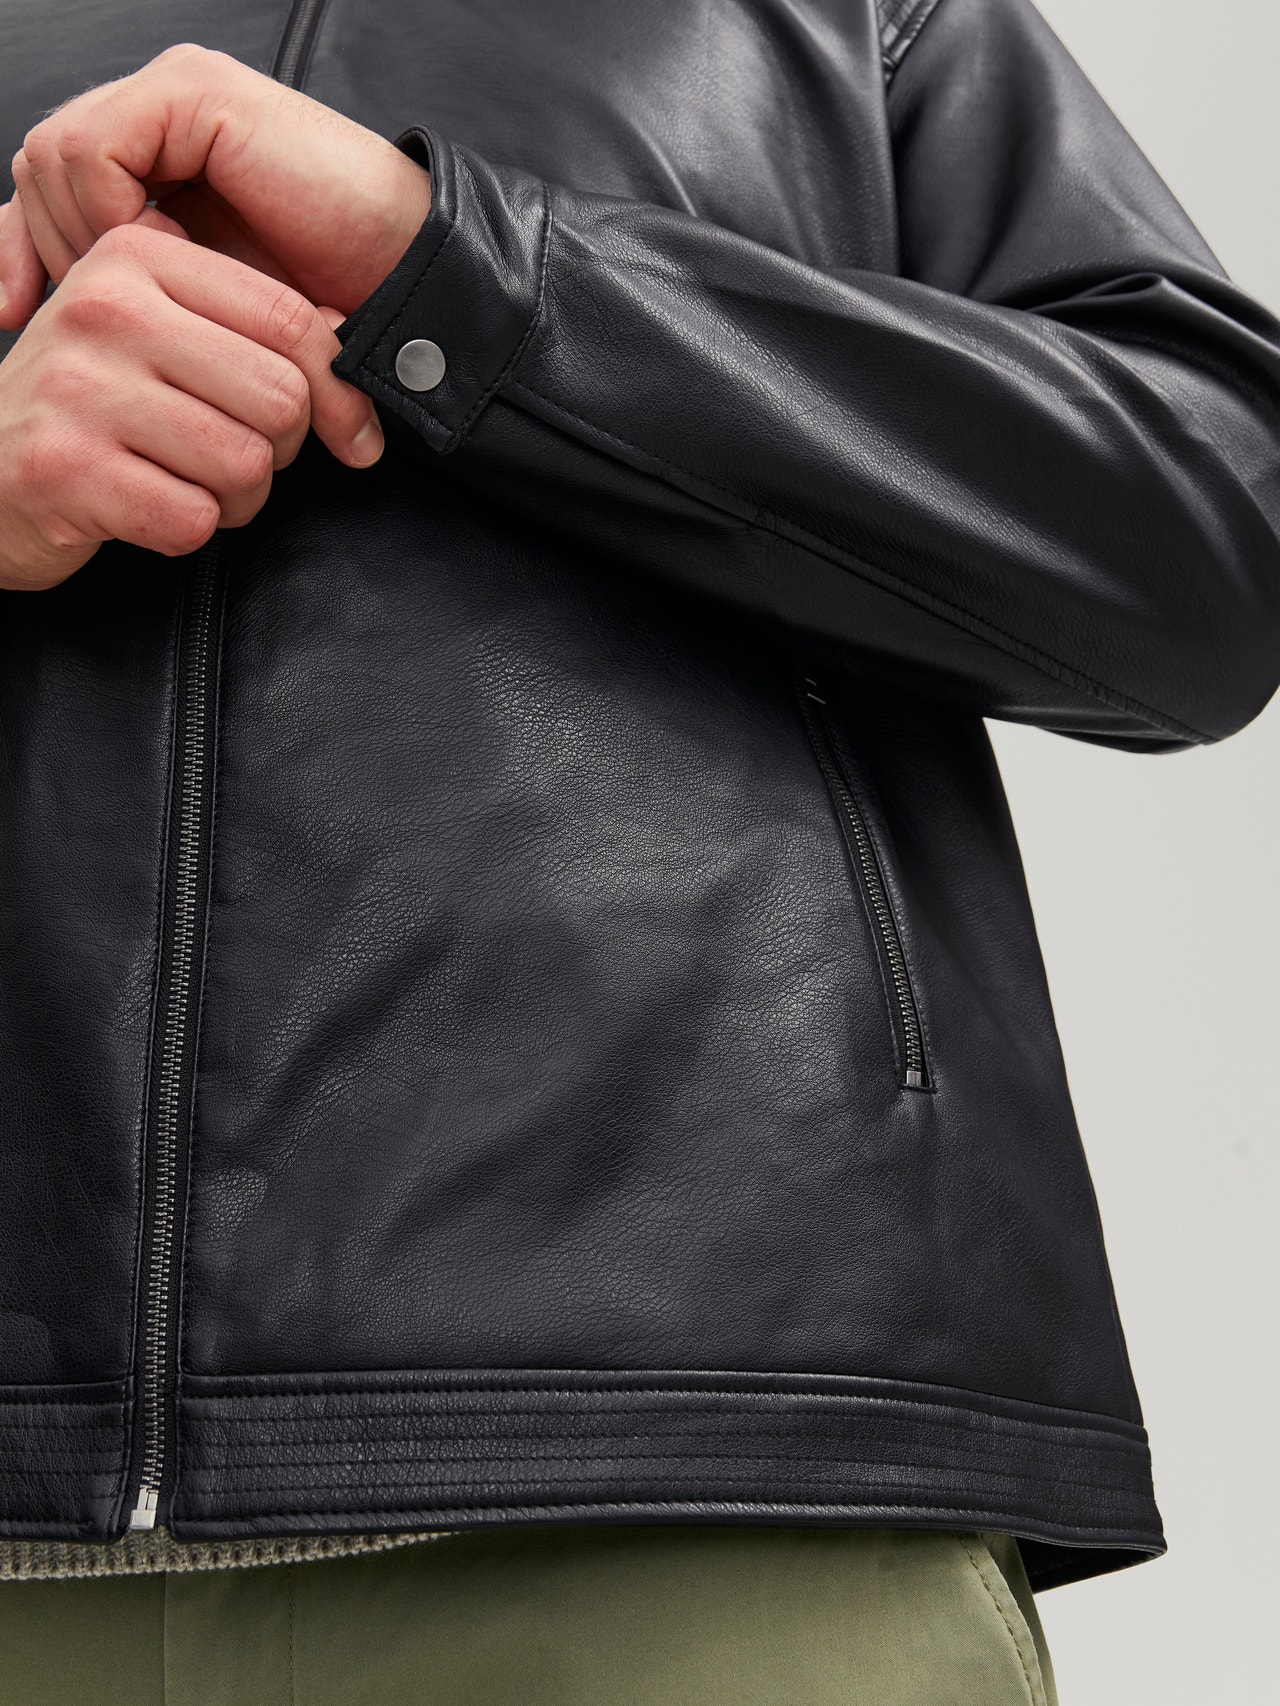 Jack & Jones Plus Size Leather look biker jacket -Black - 12230055